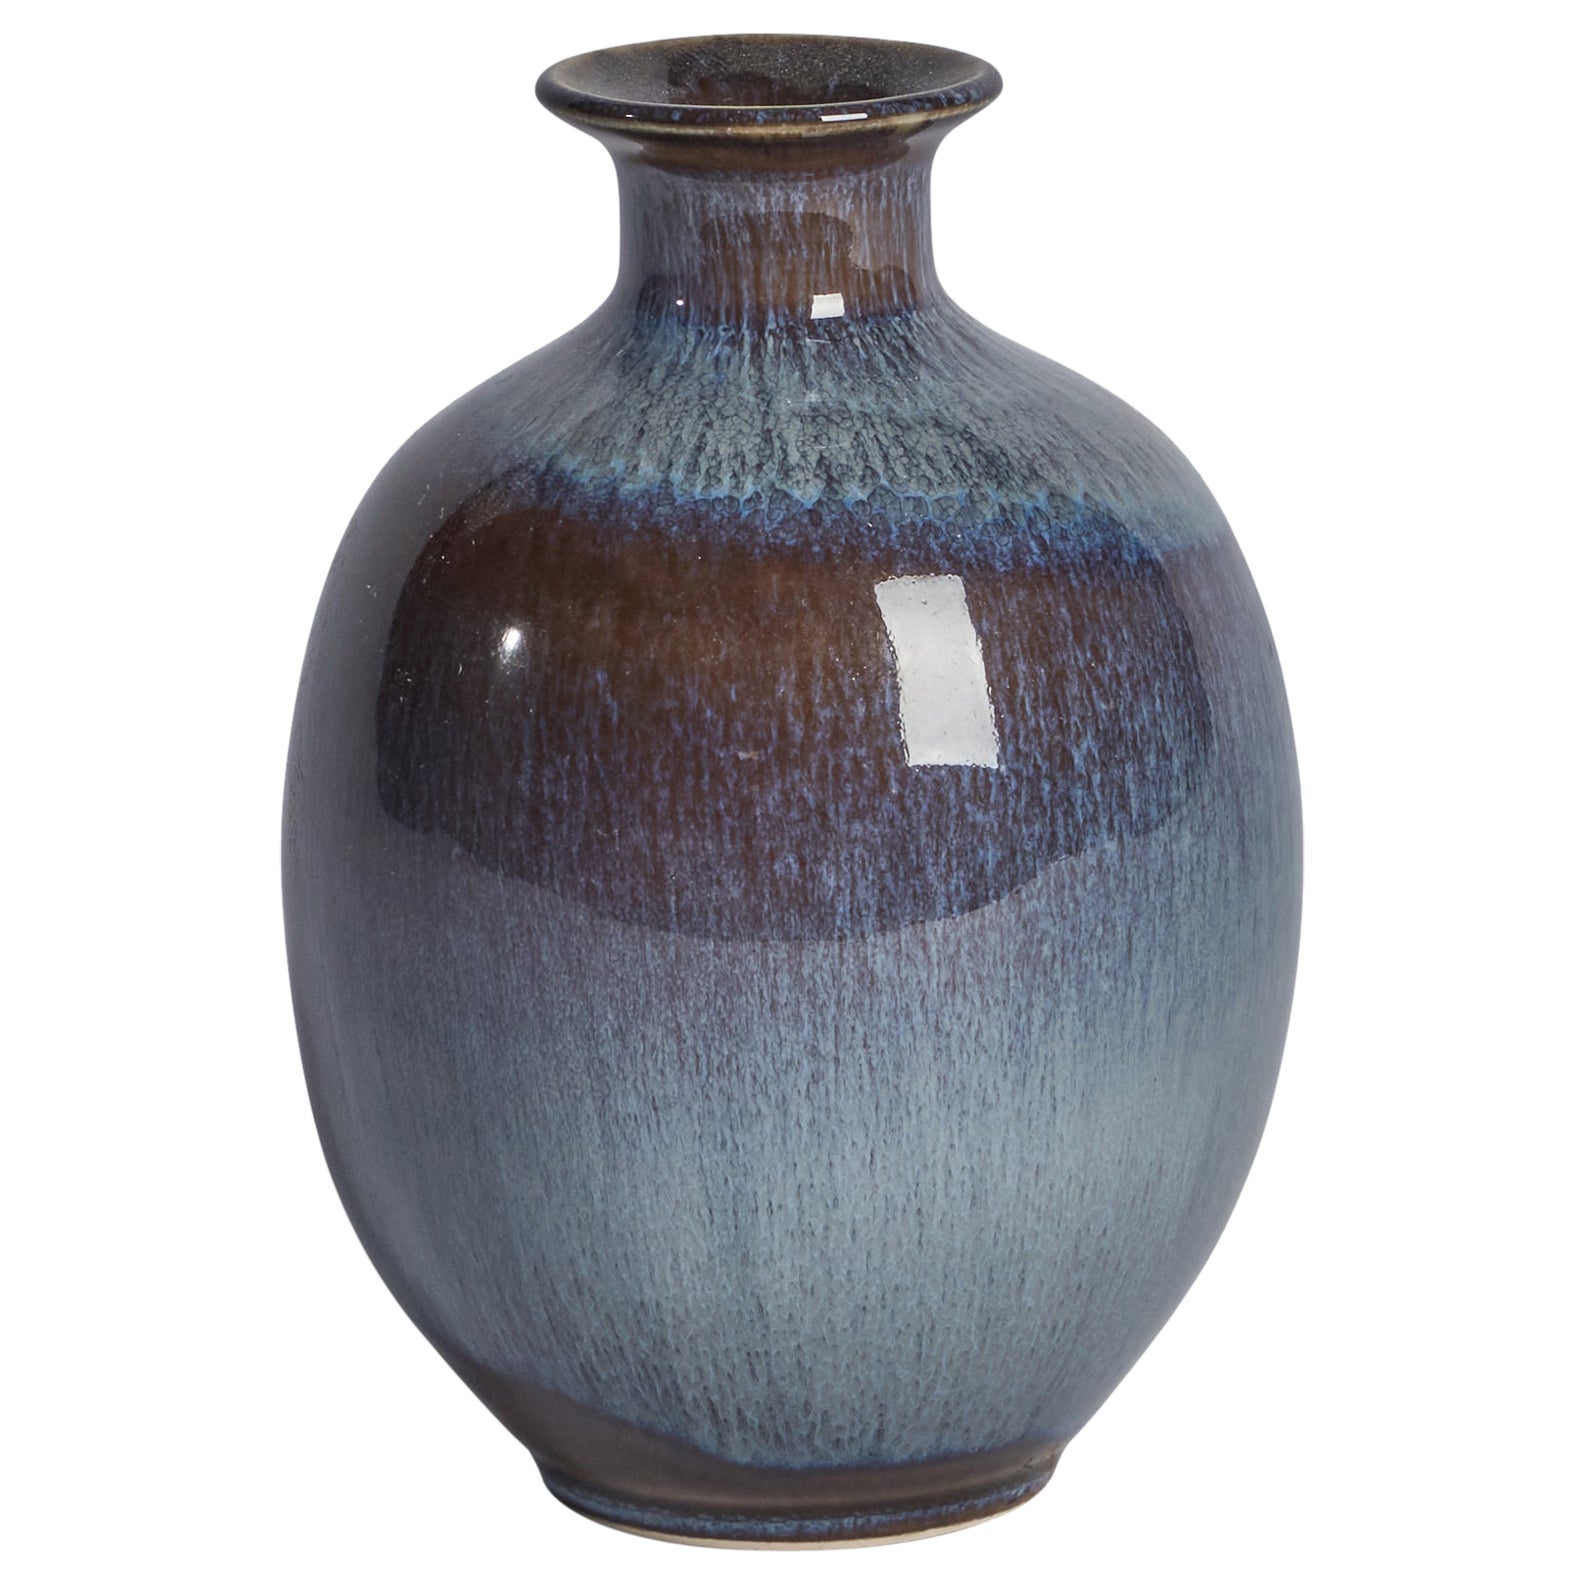 Höganäs Keramik, vase, grès, Suède, années 1960